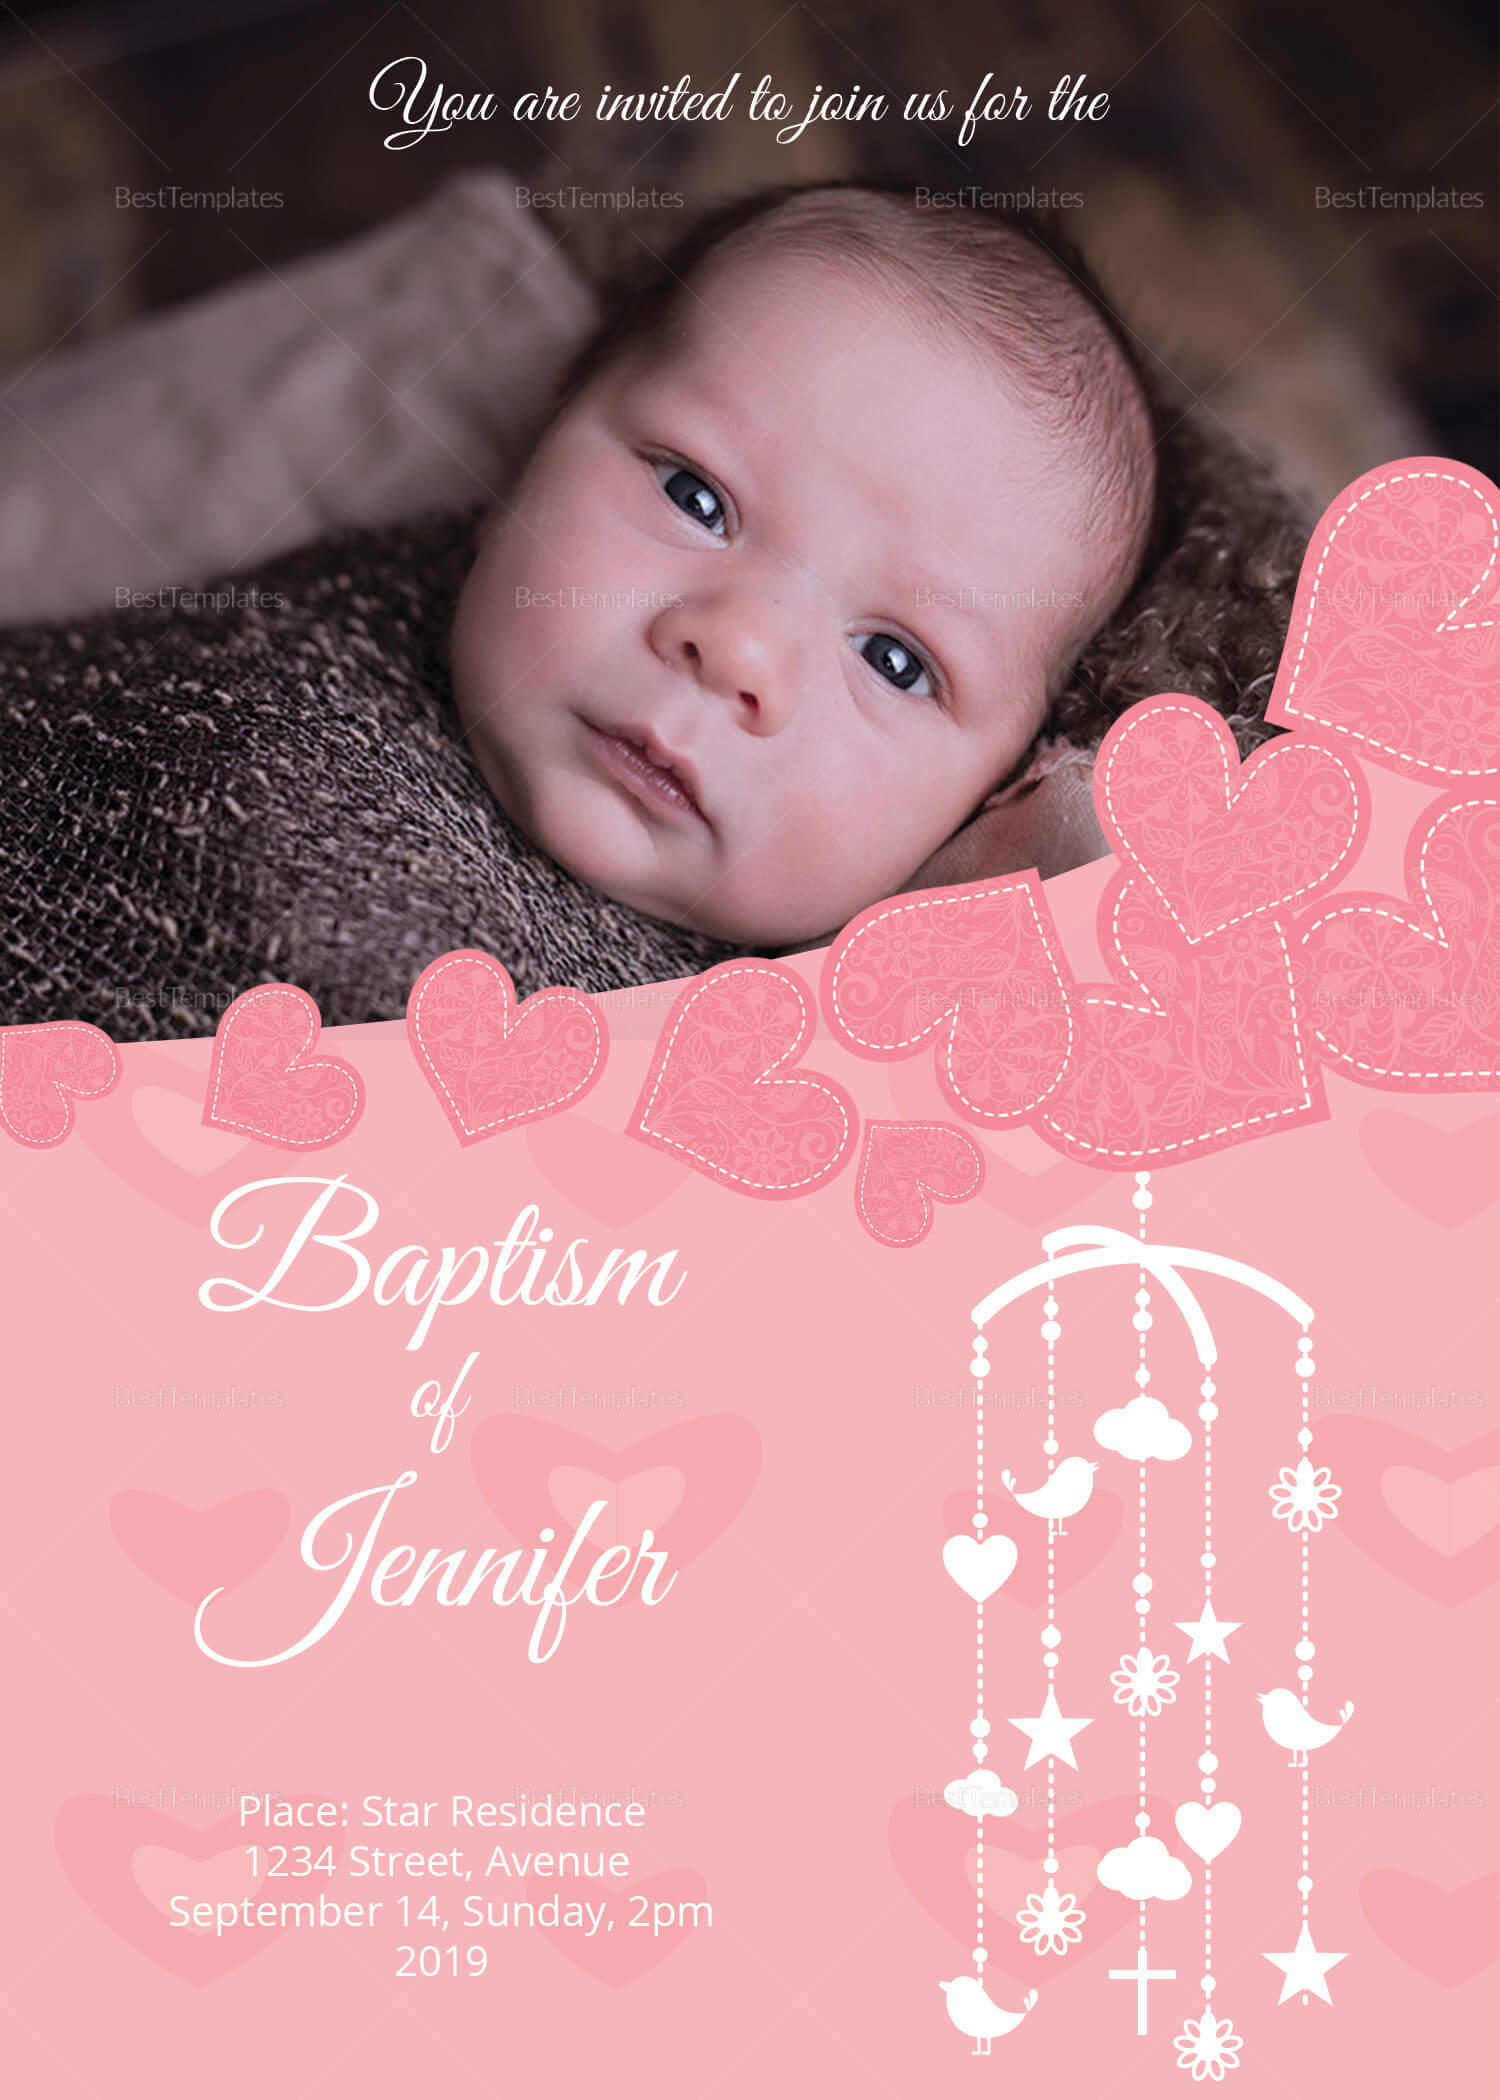 Printable Christening Baptism Invitation Card Template Intended For Baptism Invitation Card Template